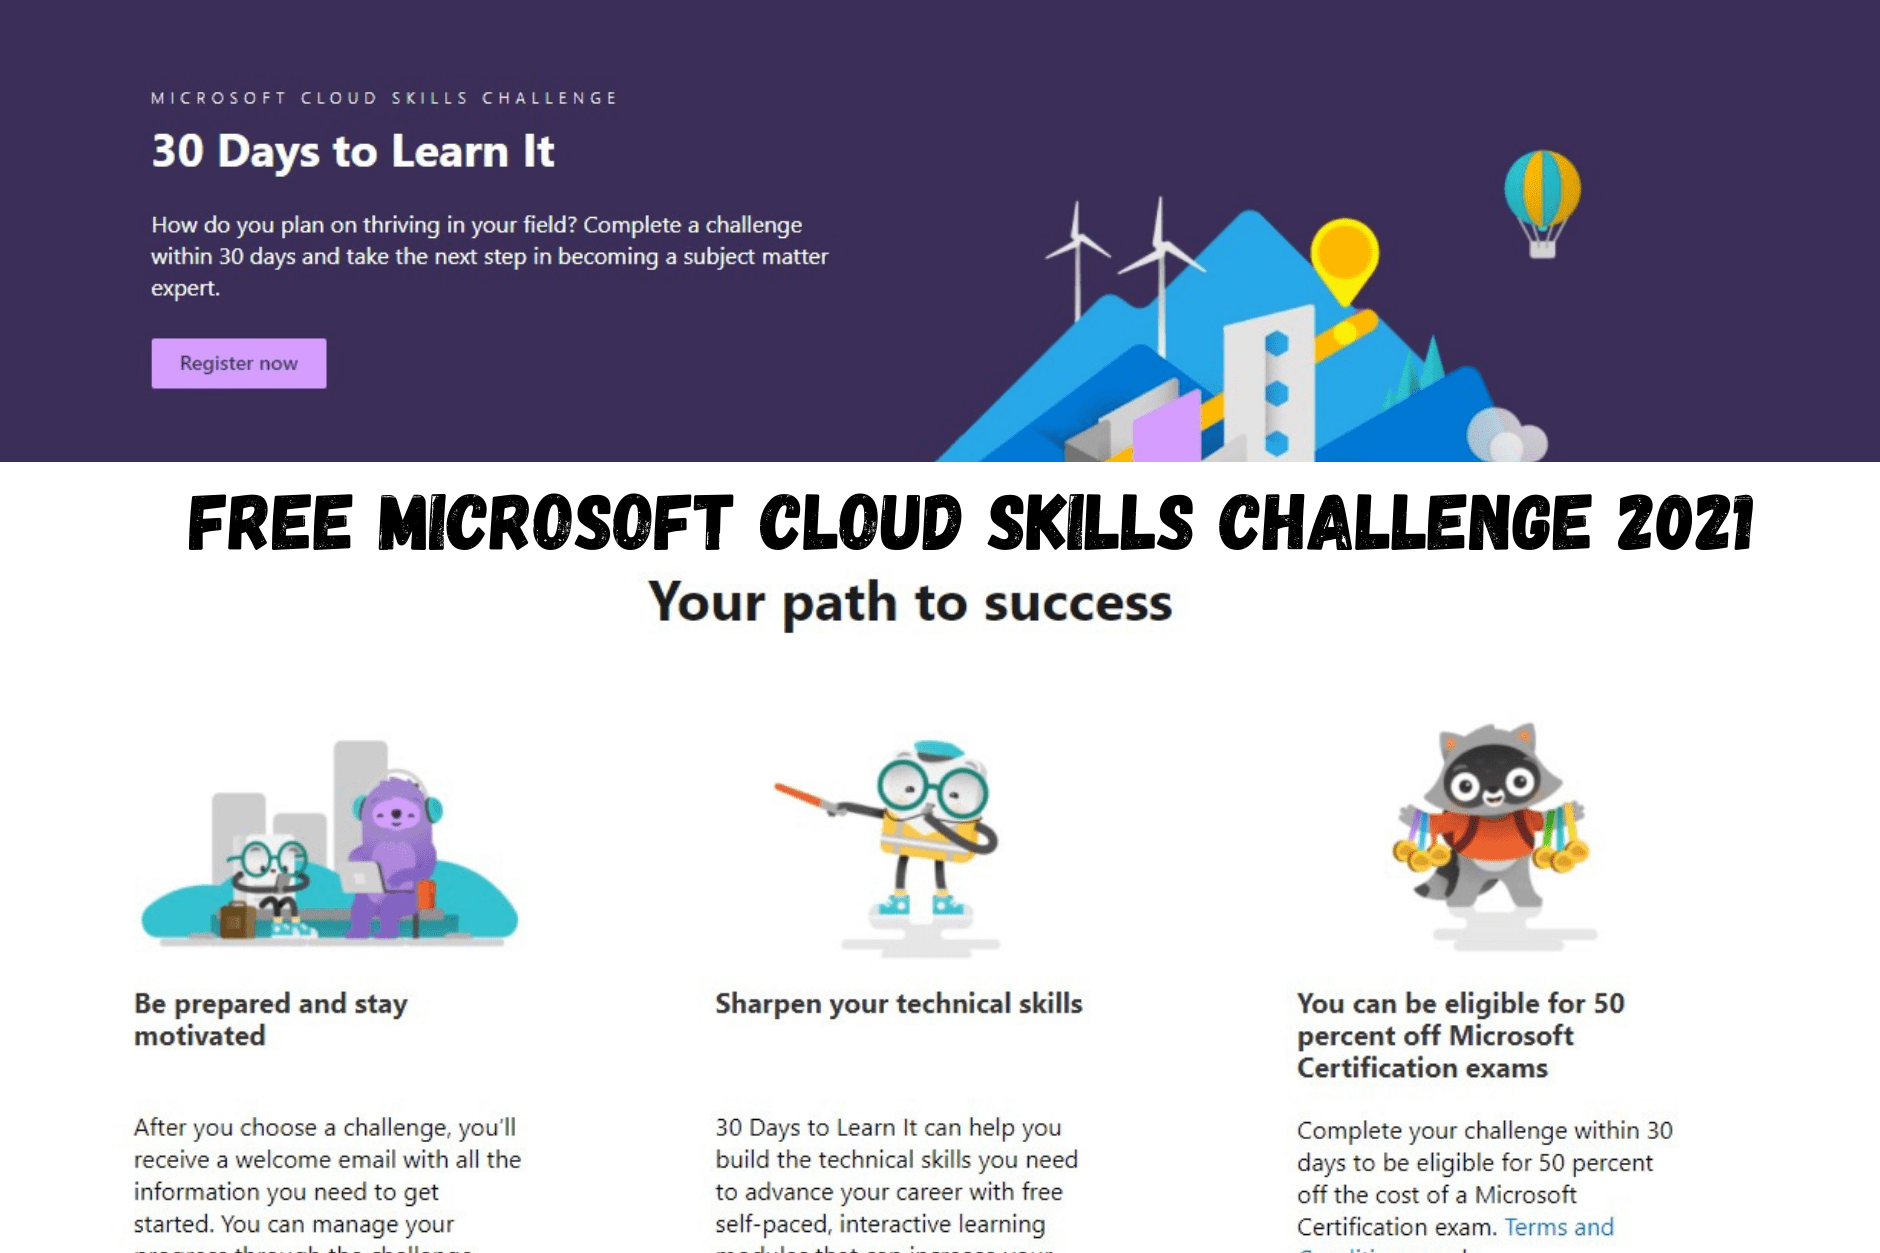 Free Microsoft Cloud Skills Challenge 2021